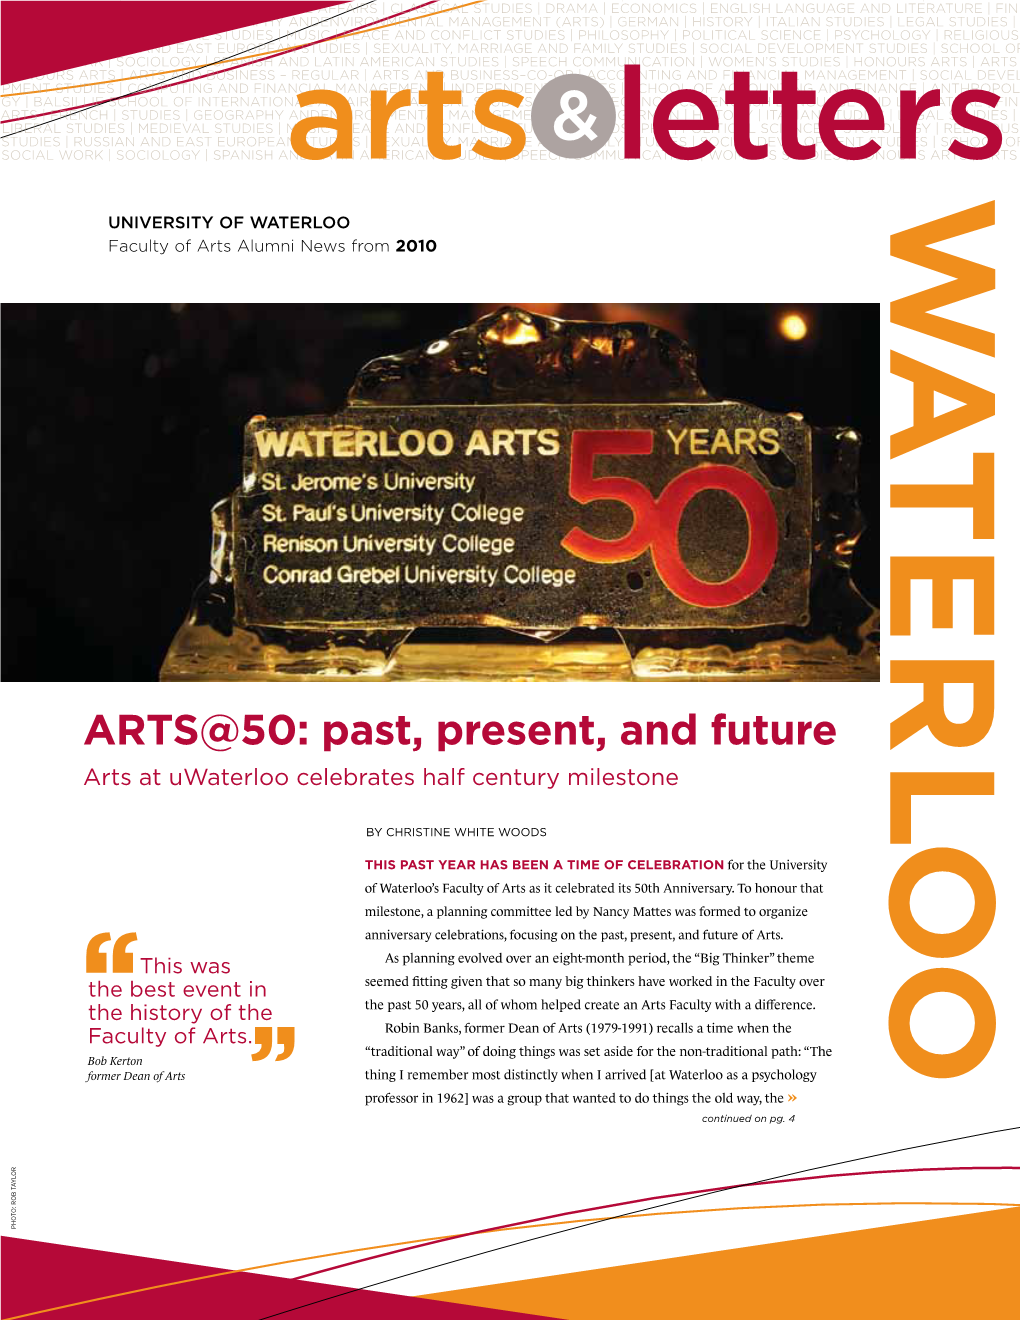 Arts@50: Past, Present, and Future